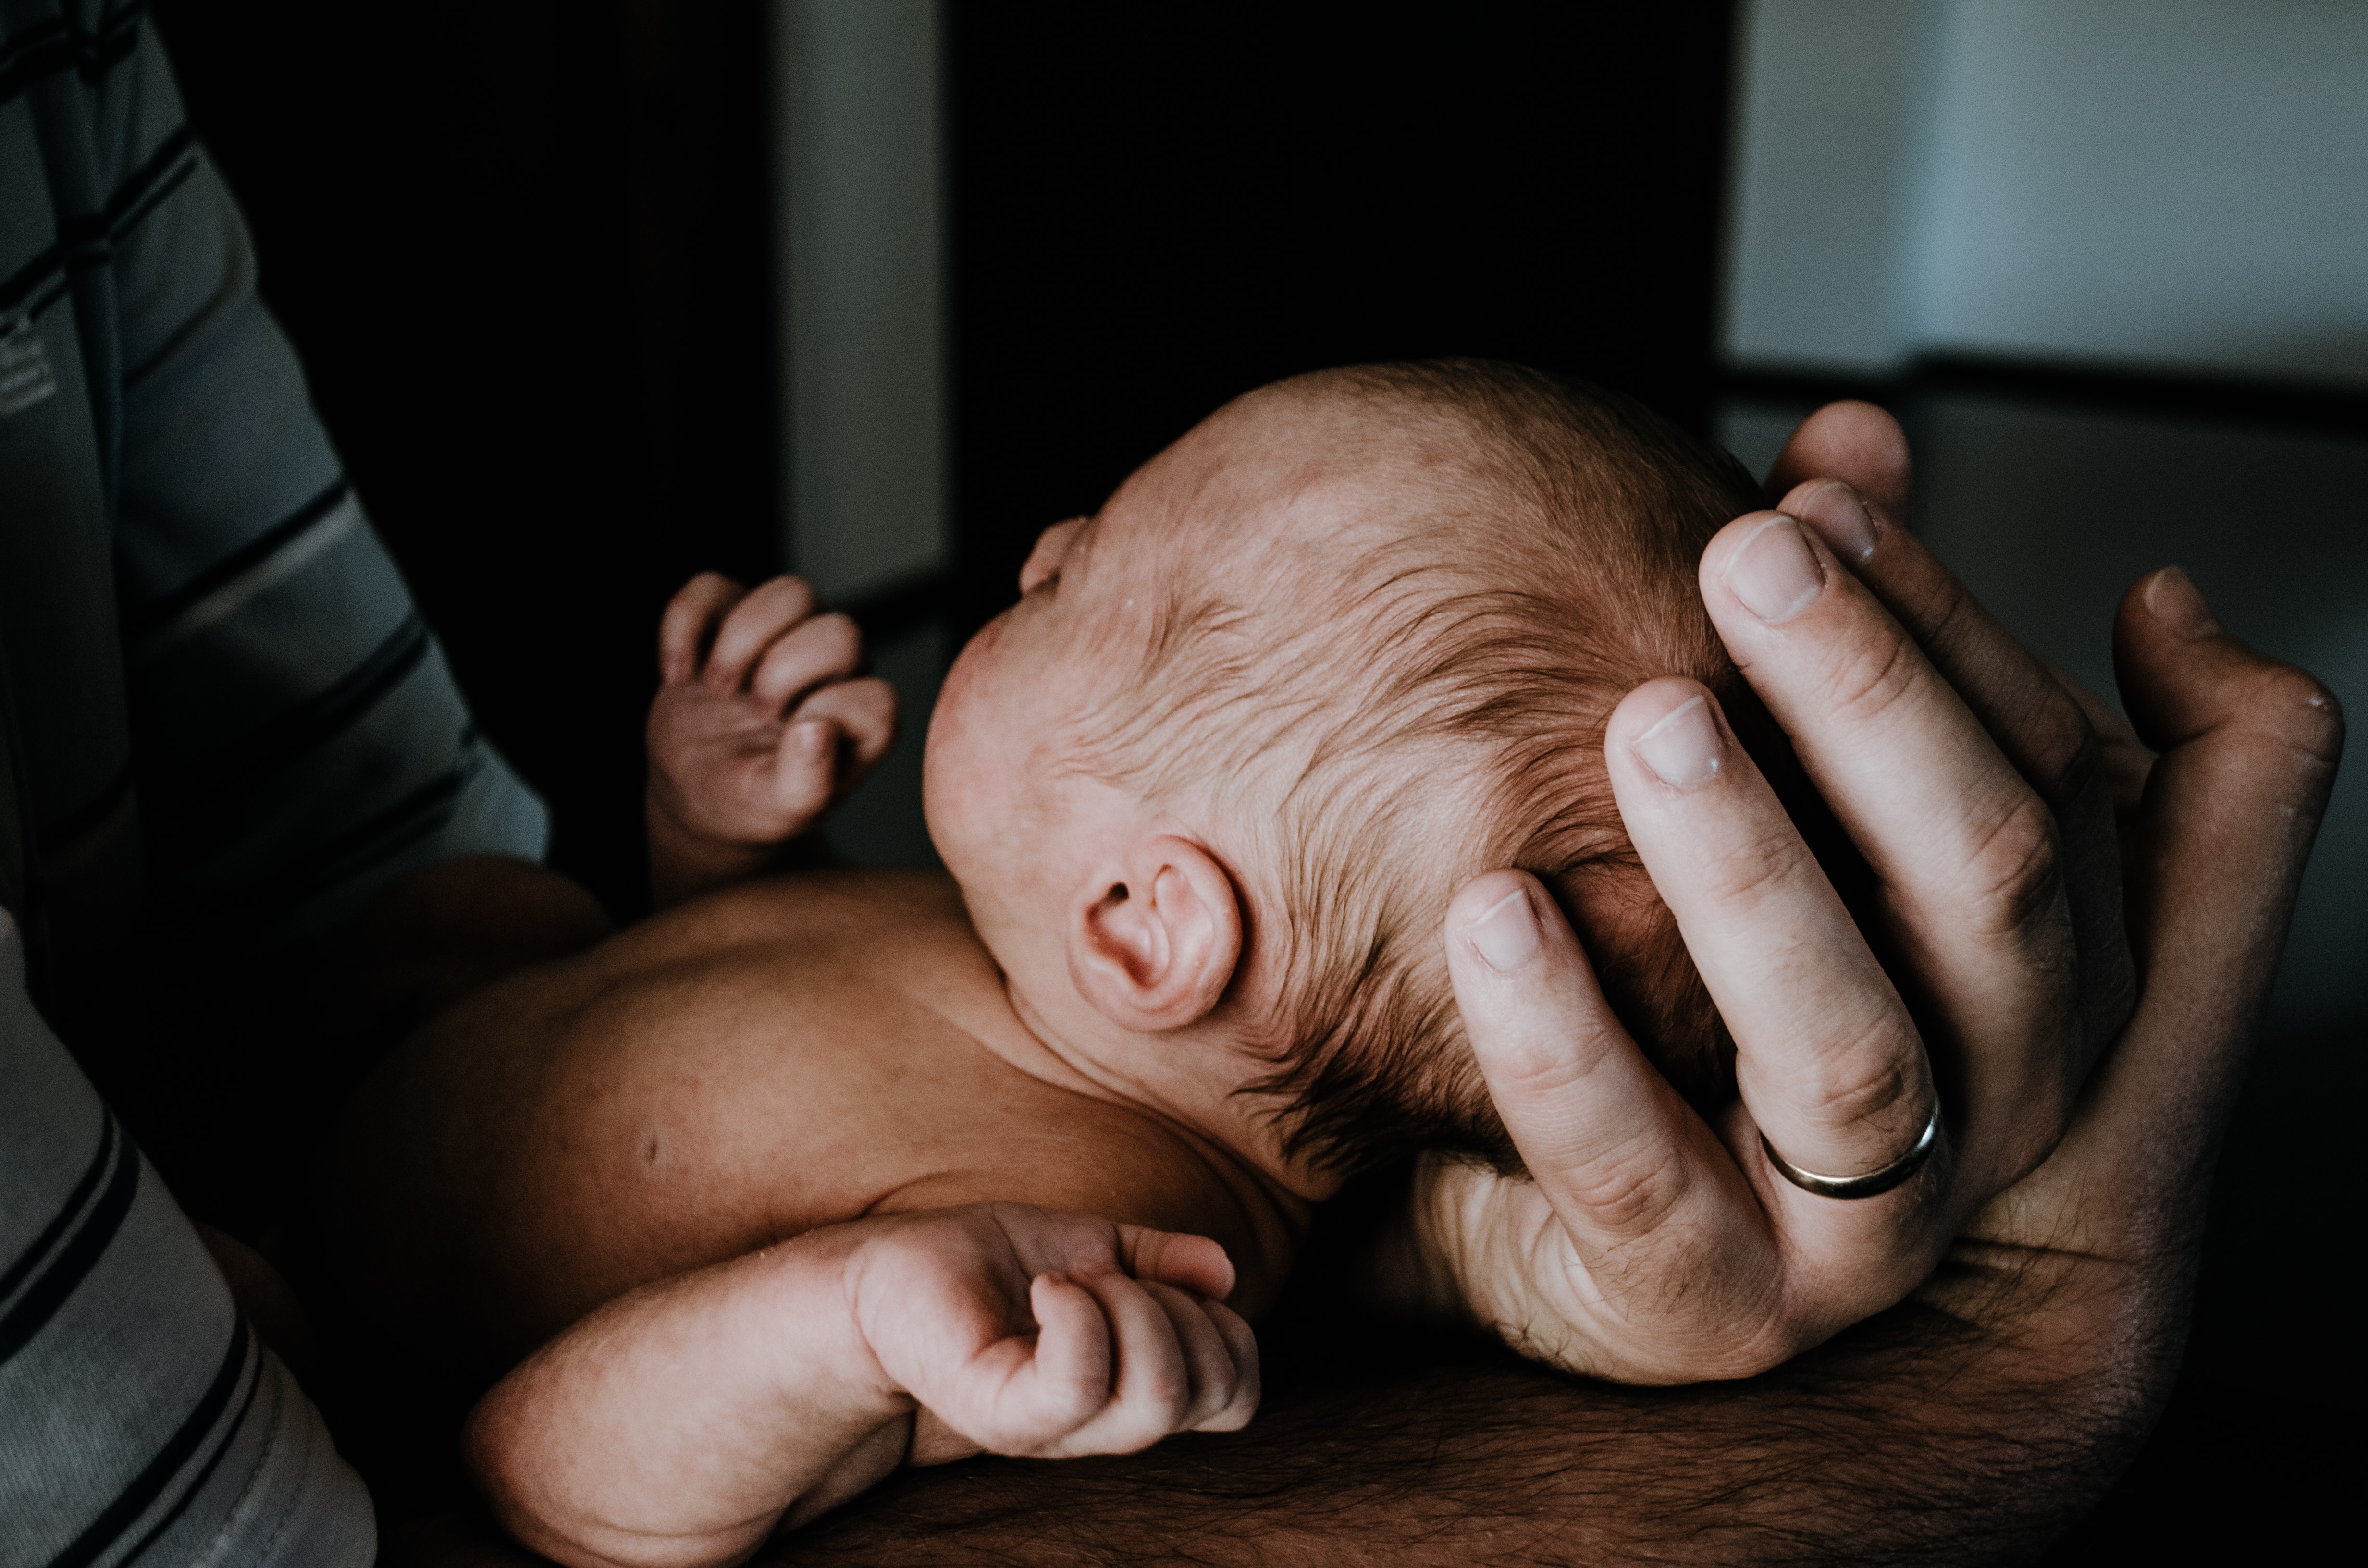 Infant Reflux and sleep